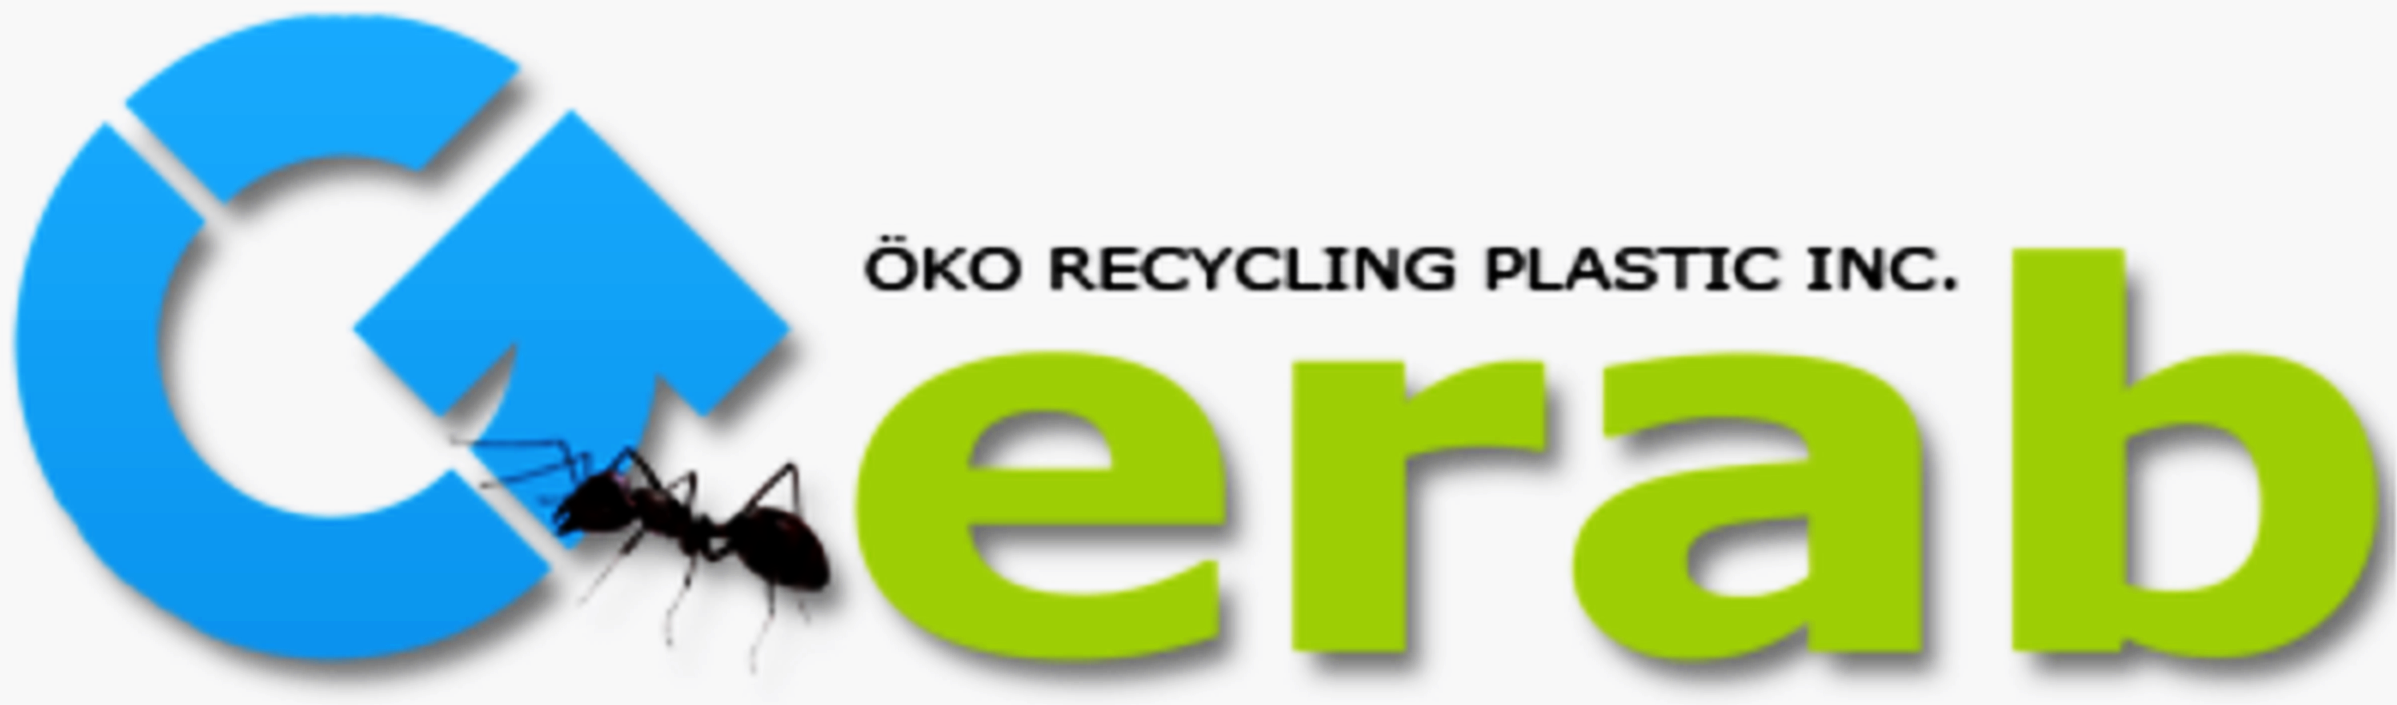 GERAB-logo.png